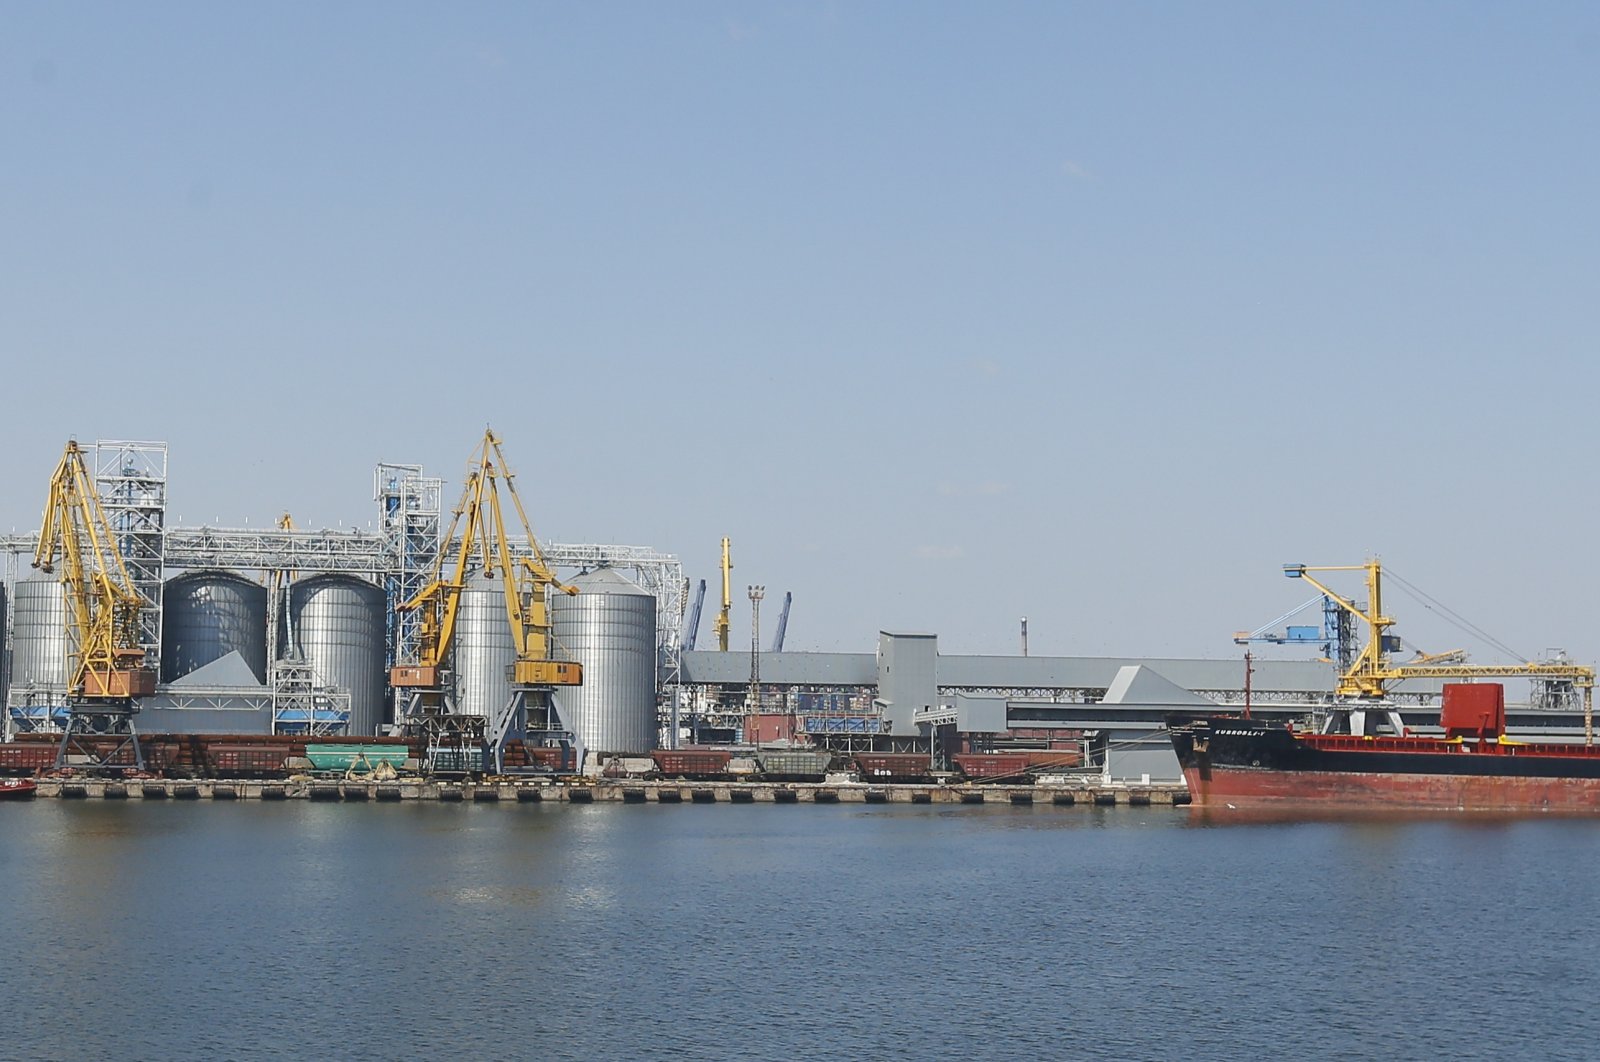 Comoros-flagged cargo vessel Kubrosli Y (R) at the grain port in Odessa, Ukraine, Aug. 19, 2022. (EPA Photo)